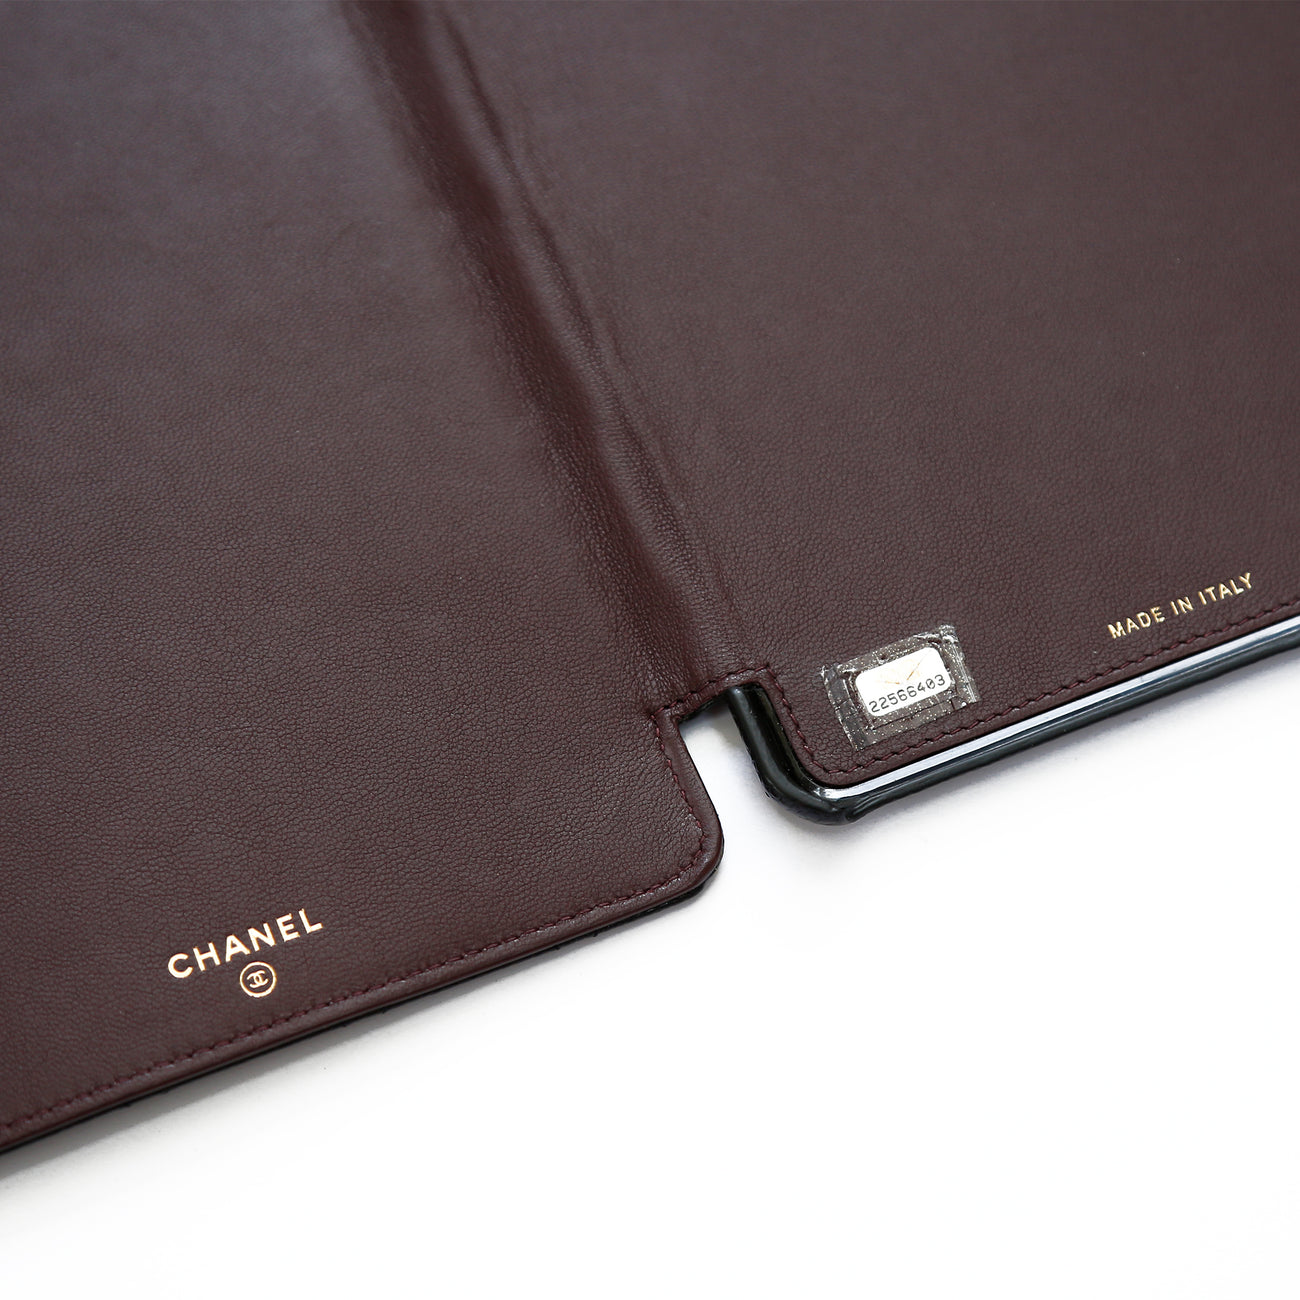 Luxury iPad Covers : Chanel iPad Cover